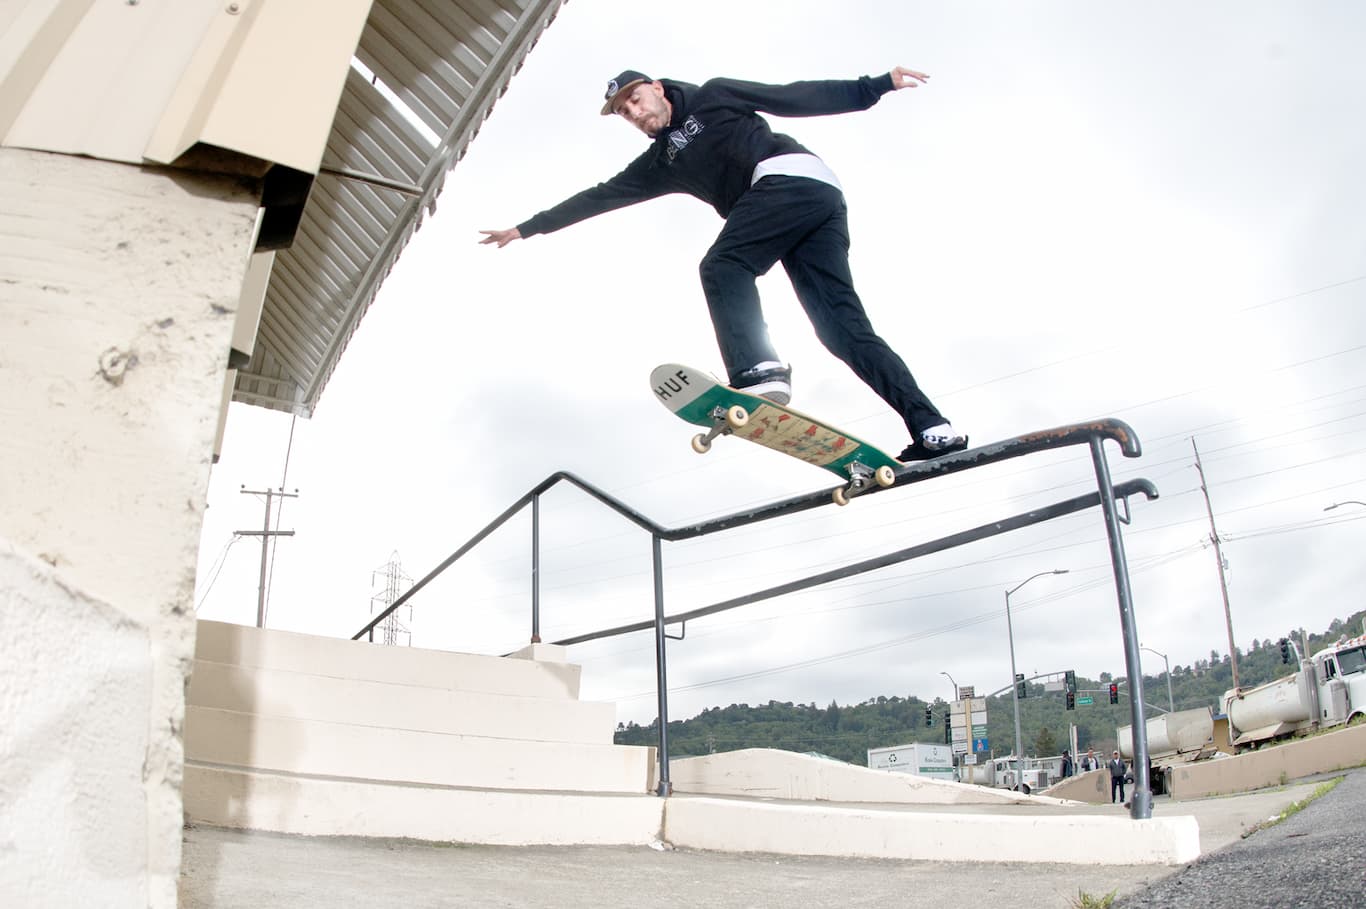 Peter Ramondetta skateboarding. Photo credit: Gabe Morford.